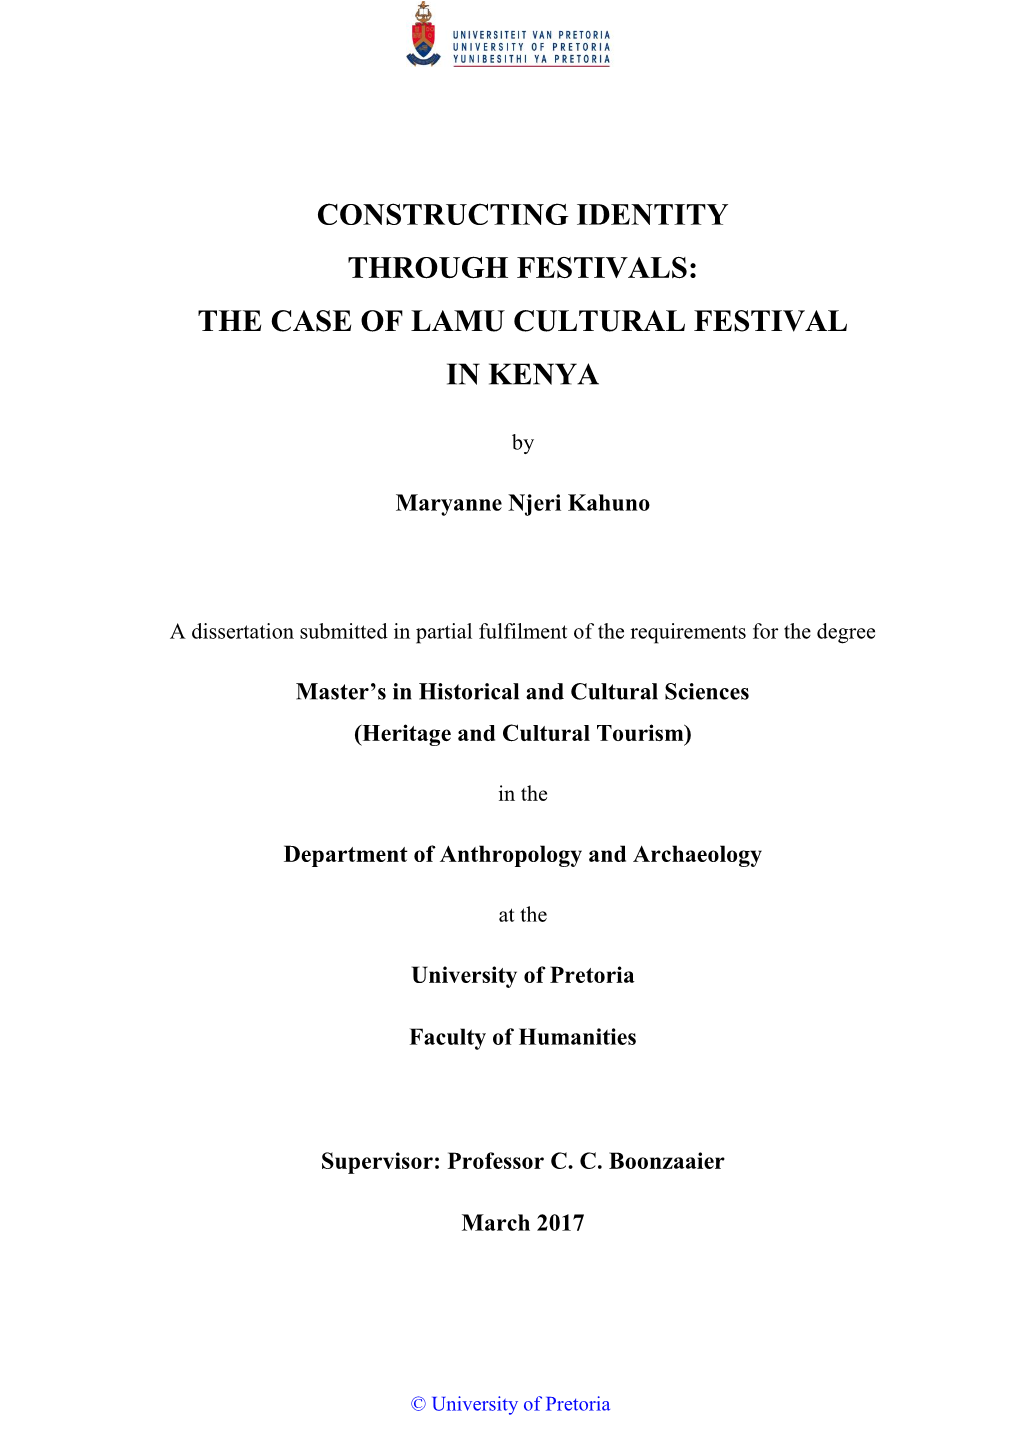 Constructing Identity Through Festivals: the Case of Lamu Cultural Festival in Kenya